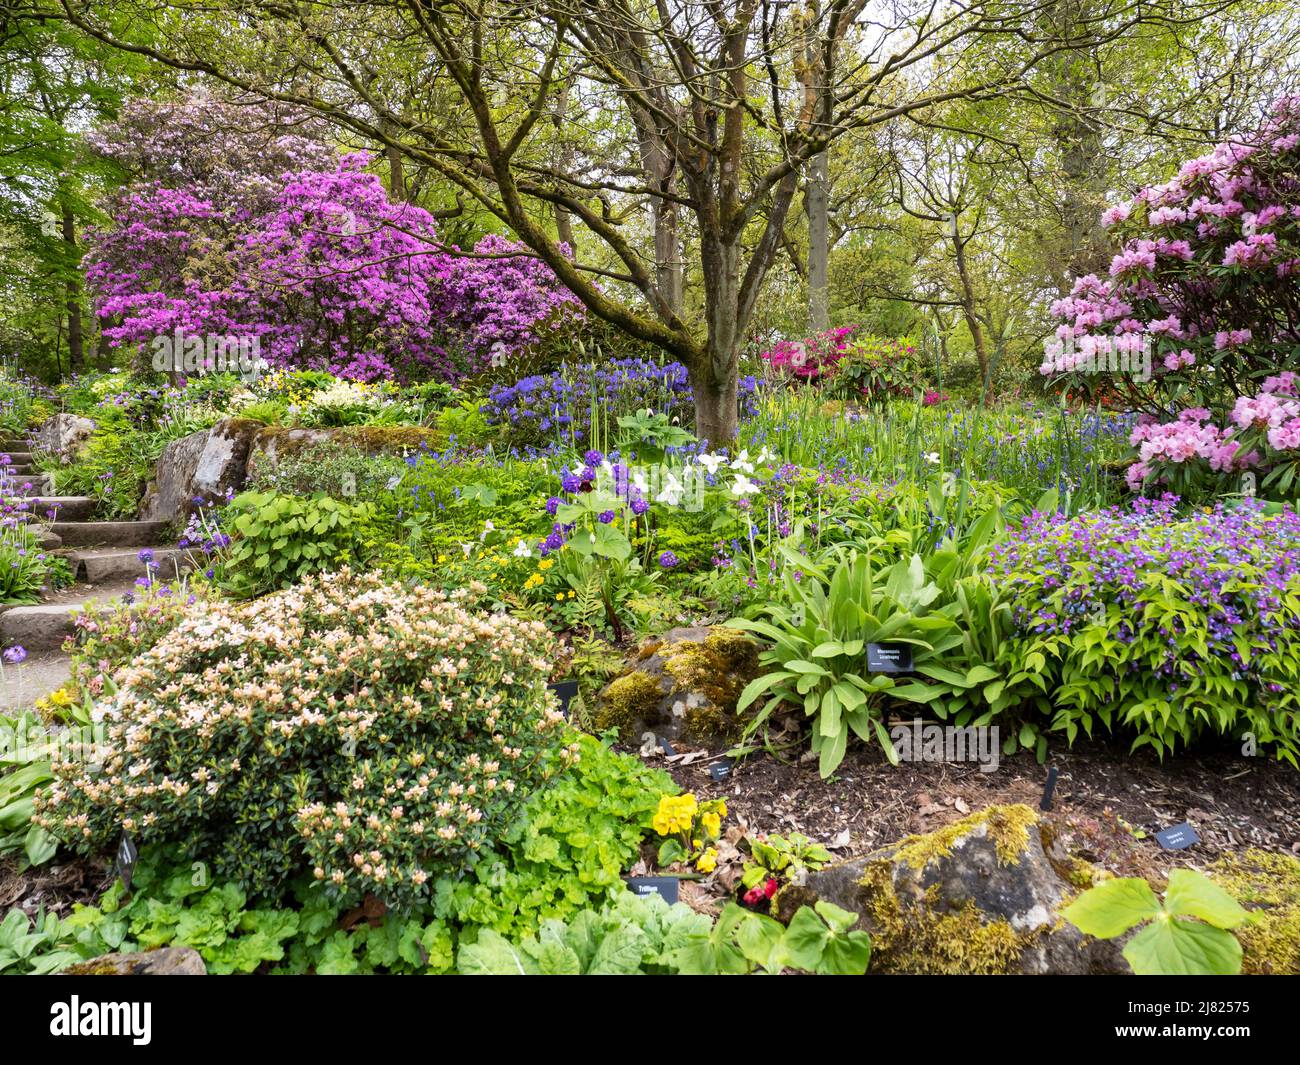 Woodland gardens at Harlow Carr Gardens, Harrogate, Yorkshire, UK. Stock Photo